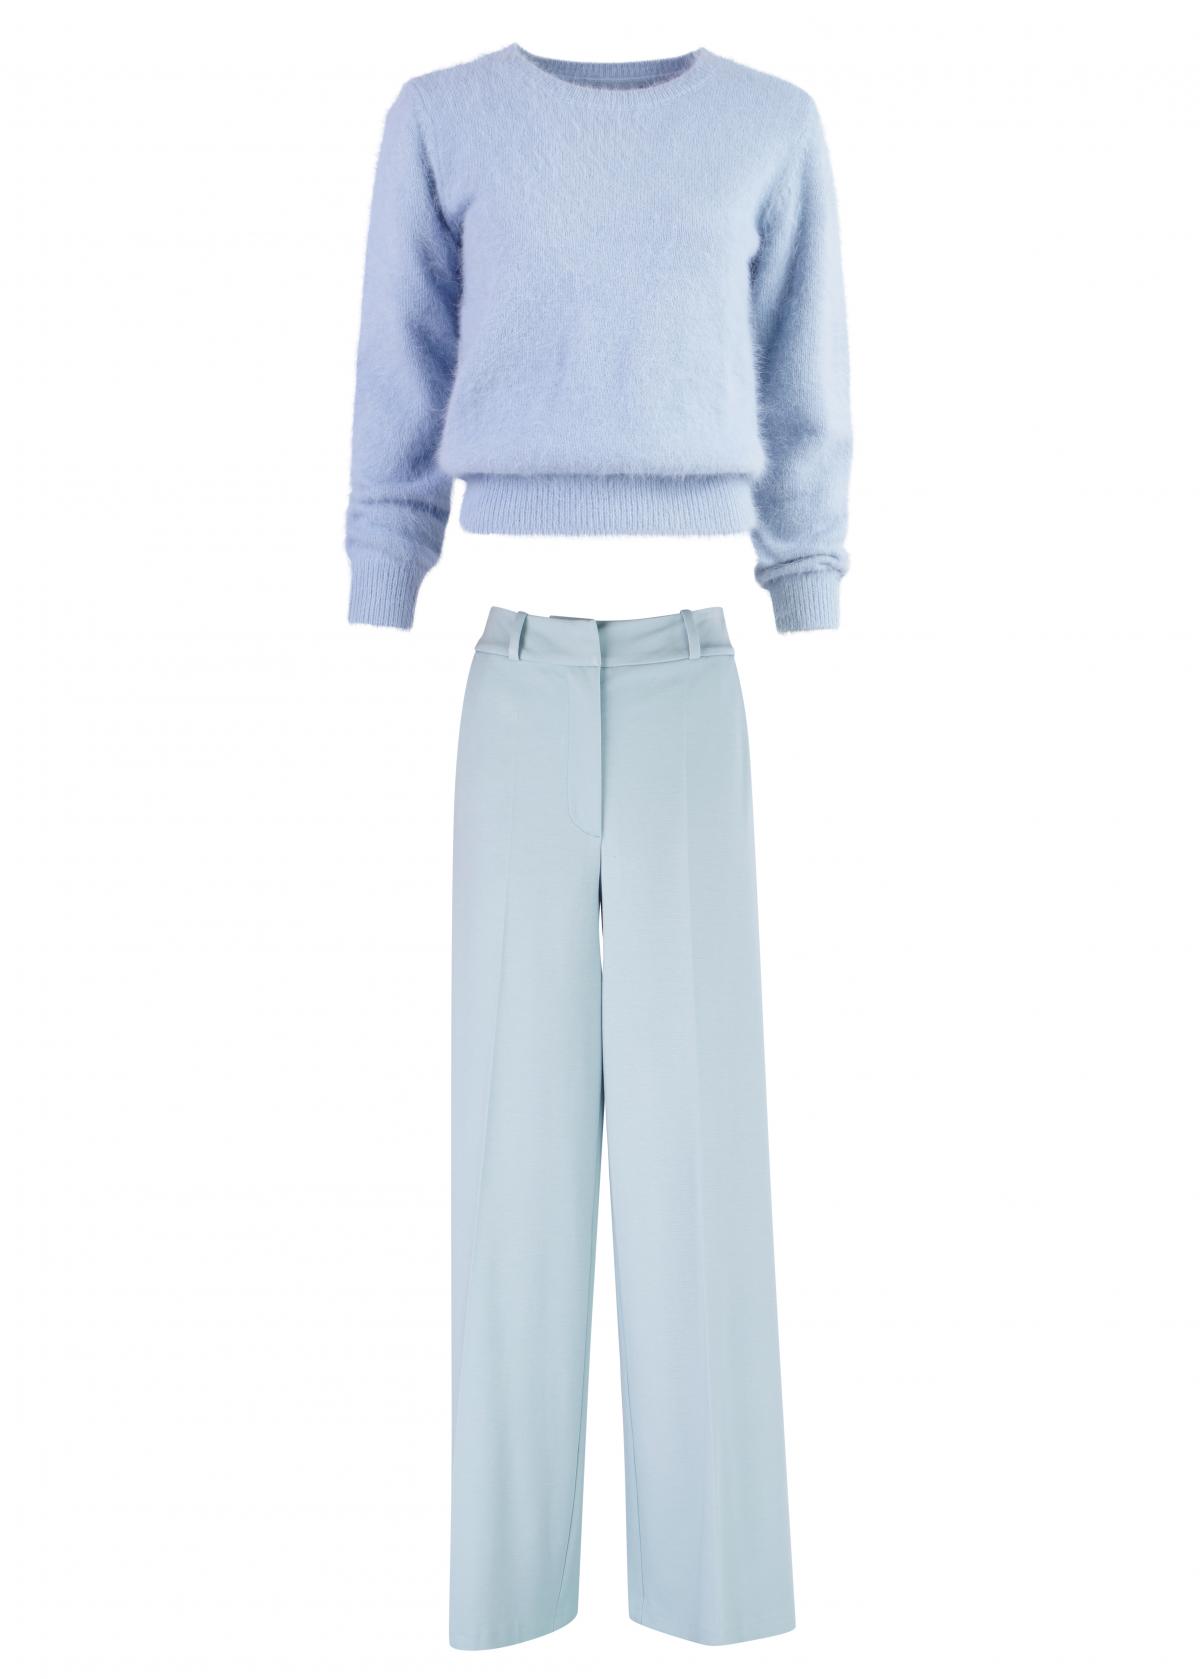 2. Pastelblauwe trui en pantalon